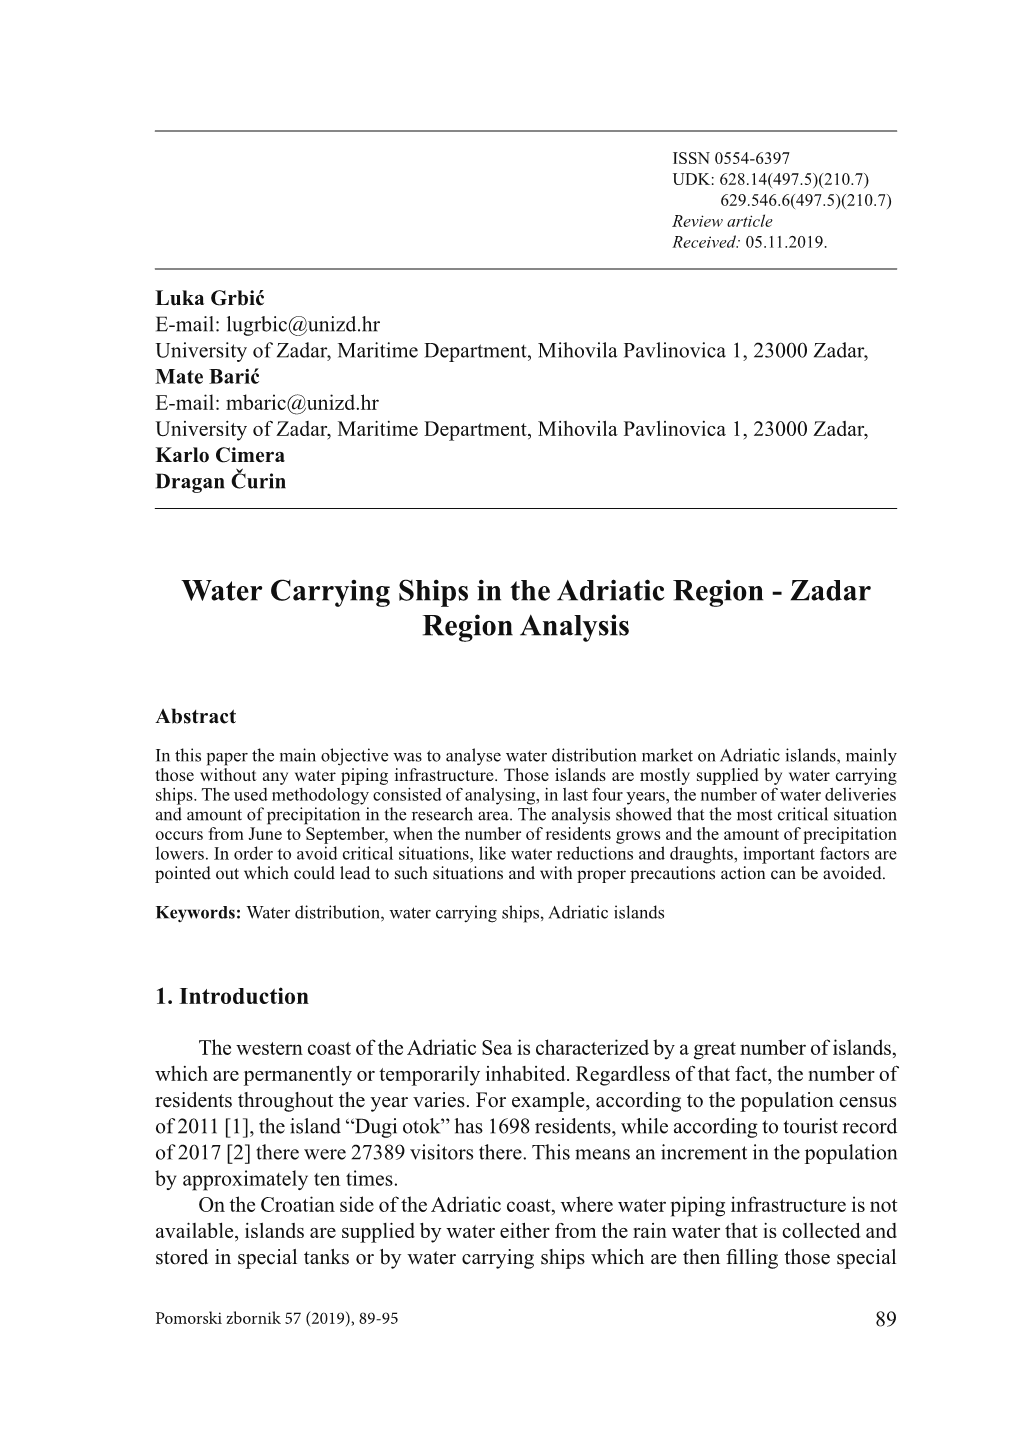 Water Carrying Ships in the Adriatic Region - Zadar Region Analysis